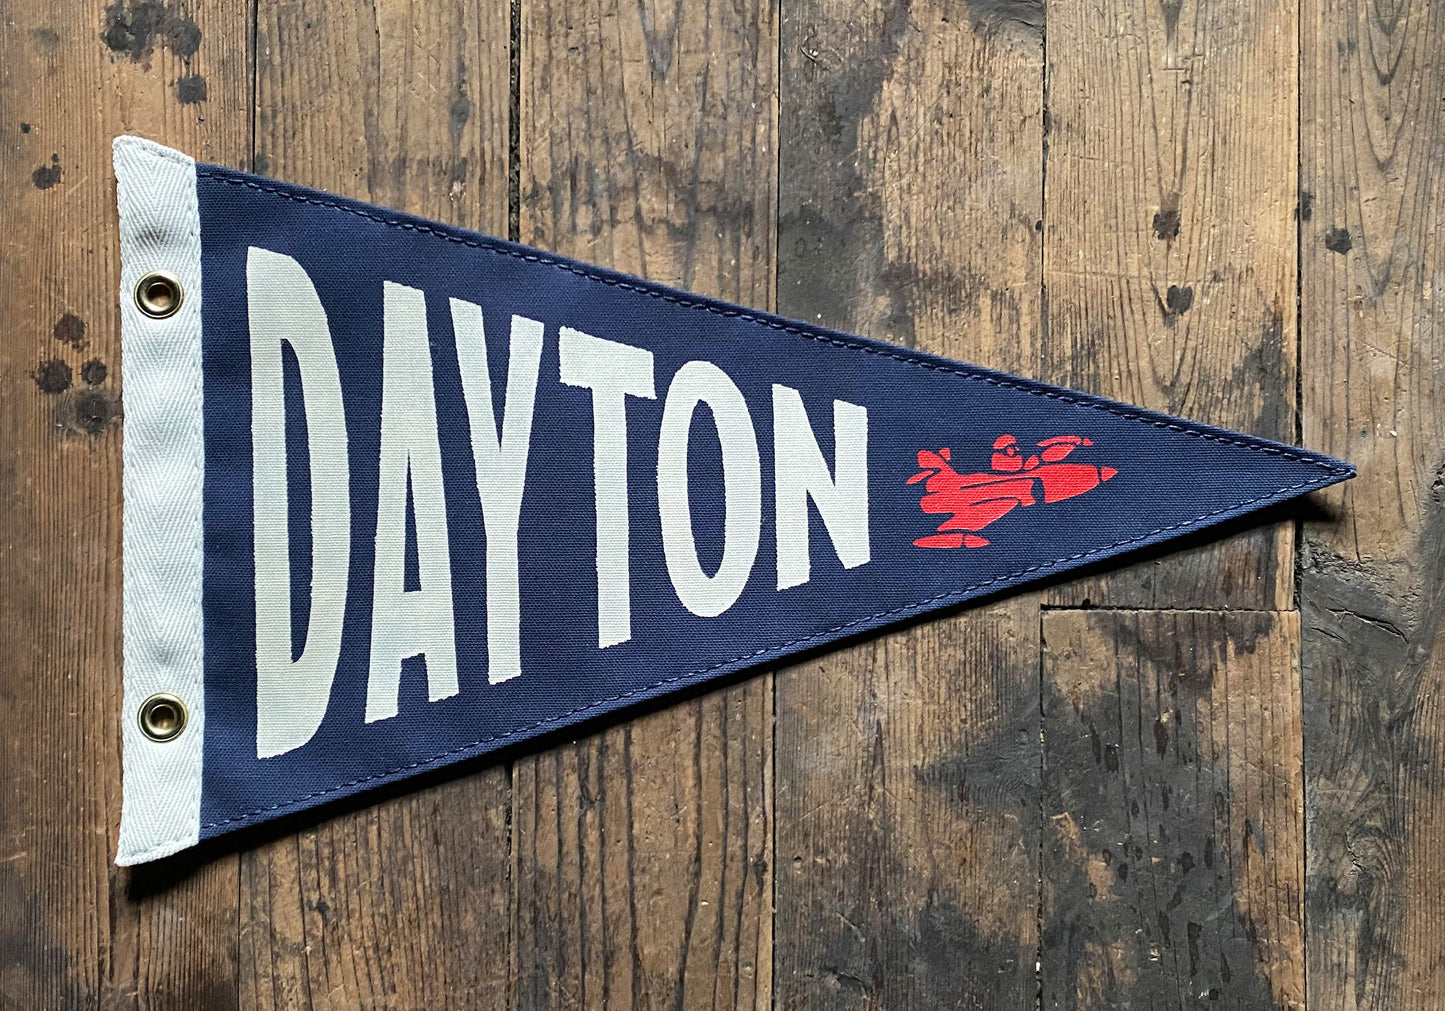 Dayton Vintage-Inspired Pennant